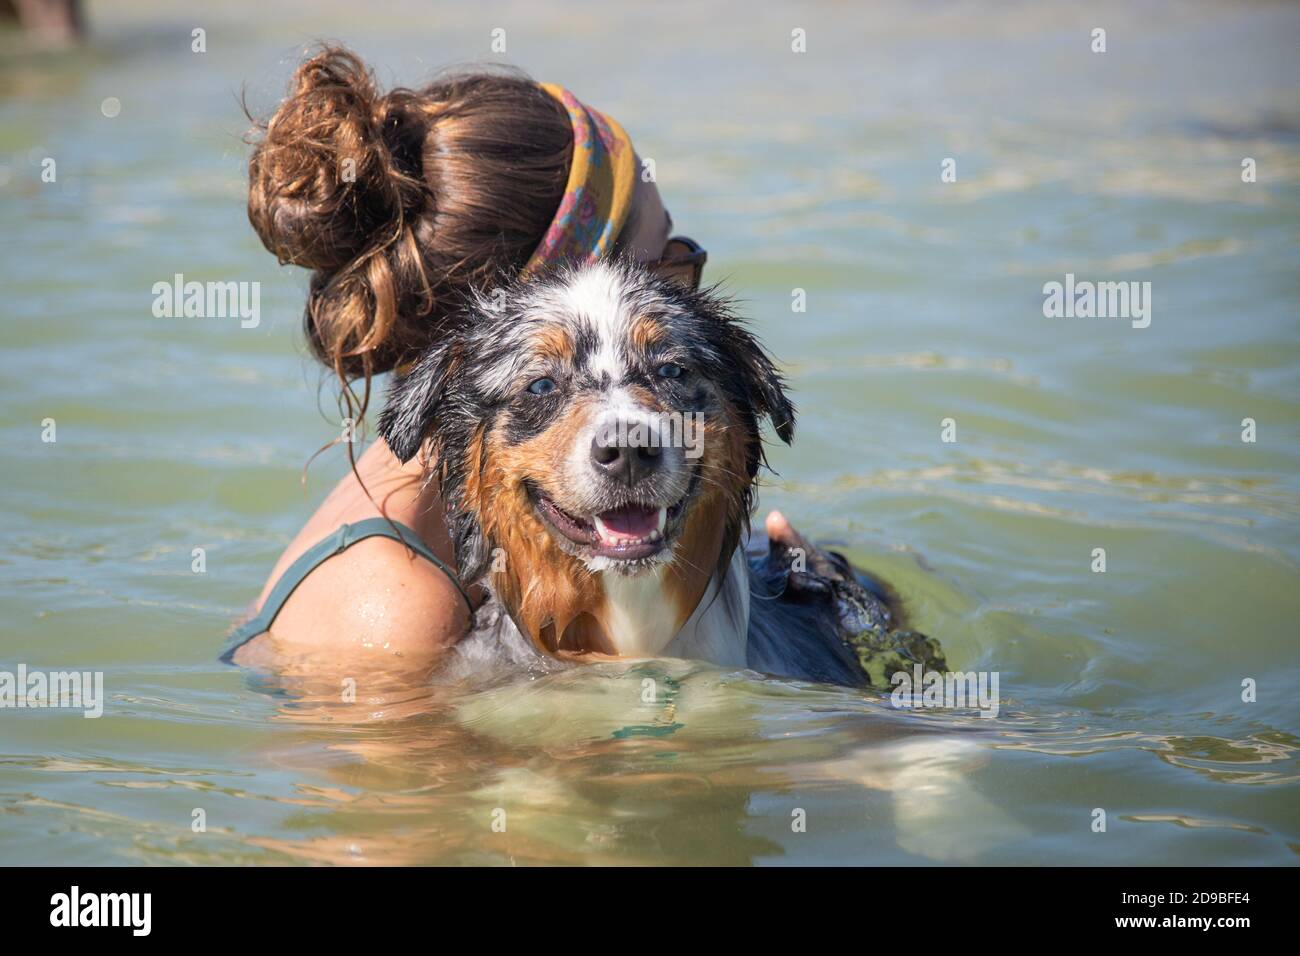 Woman swimming in ocean with an Australian shepherd dog, Florida, USA Stock Photo